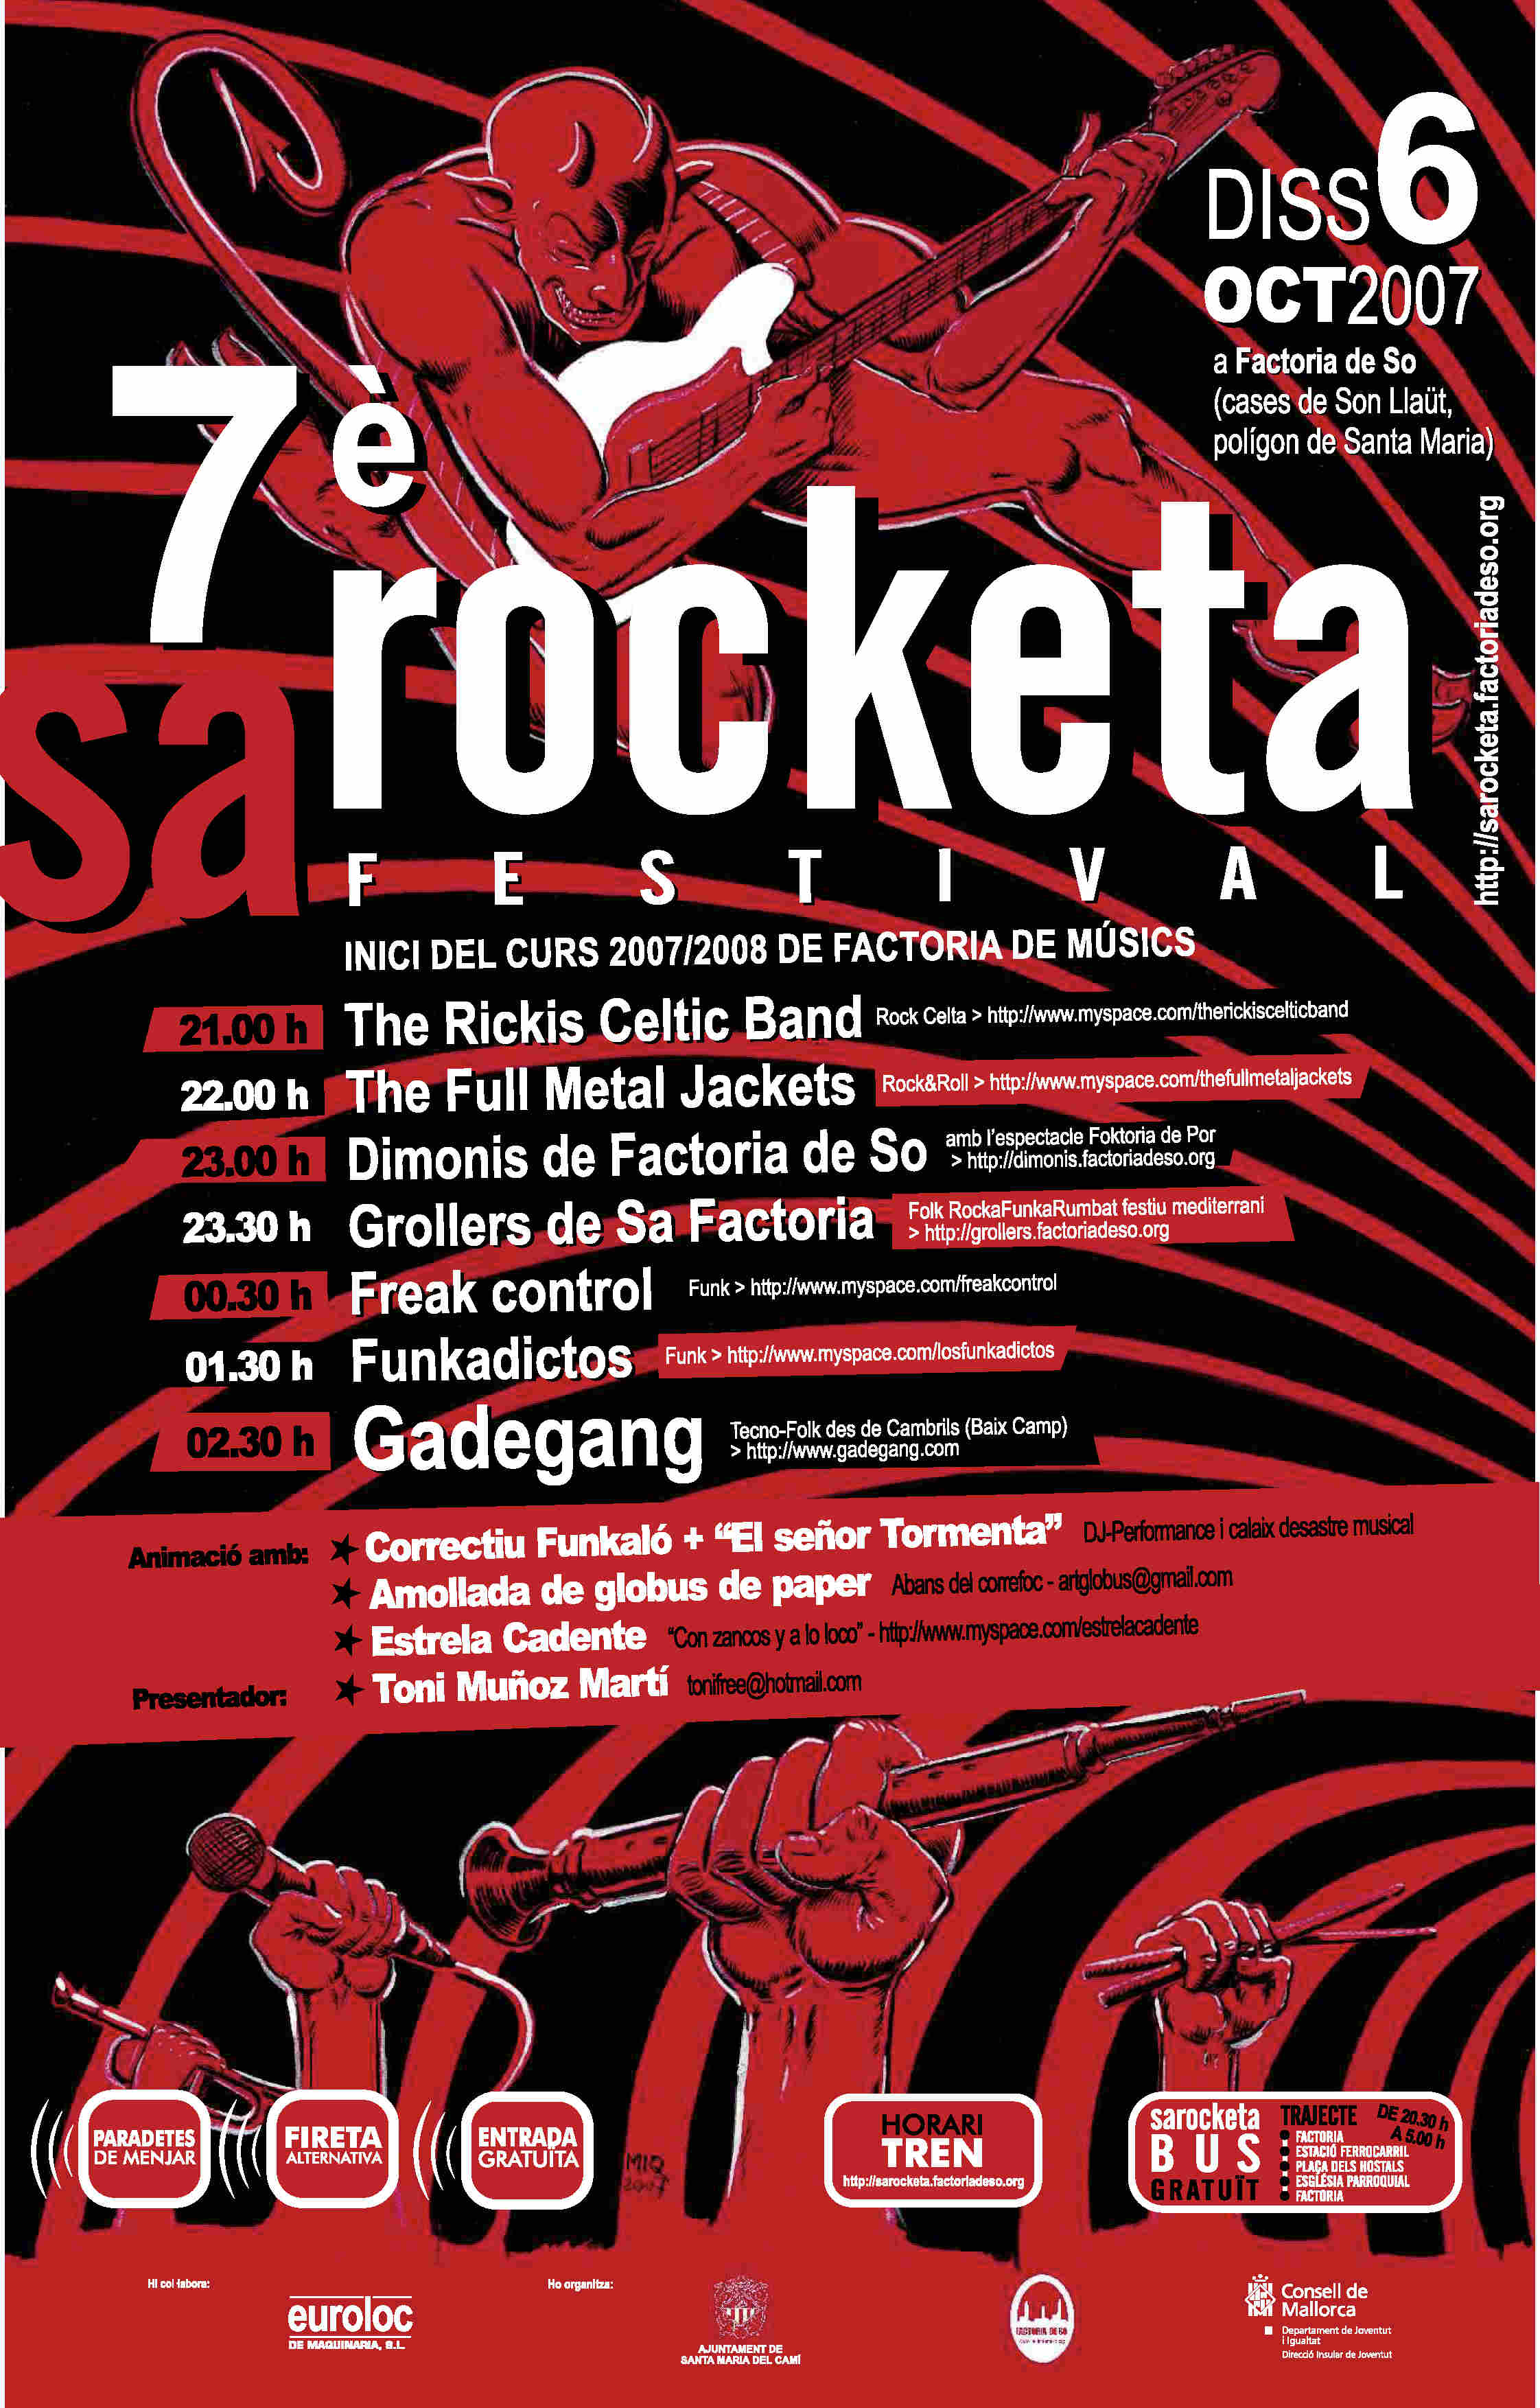 SaRocketaFestival2007